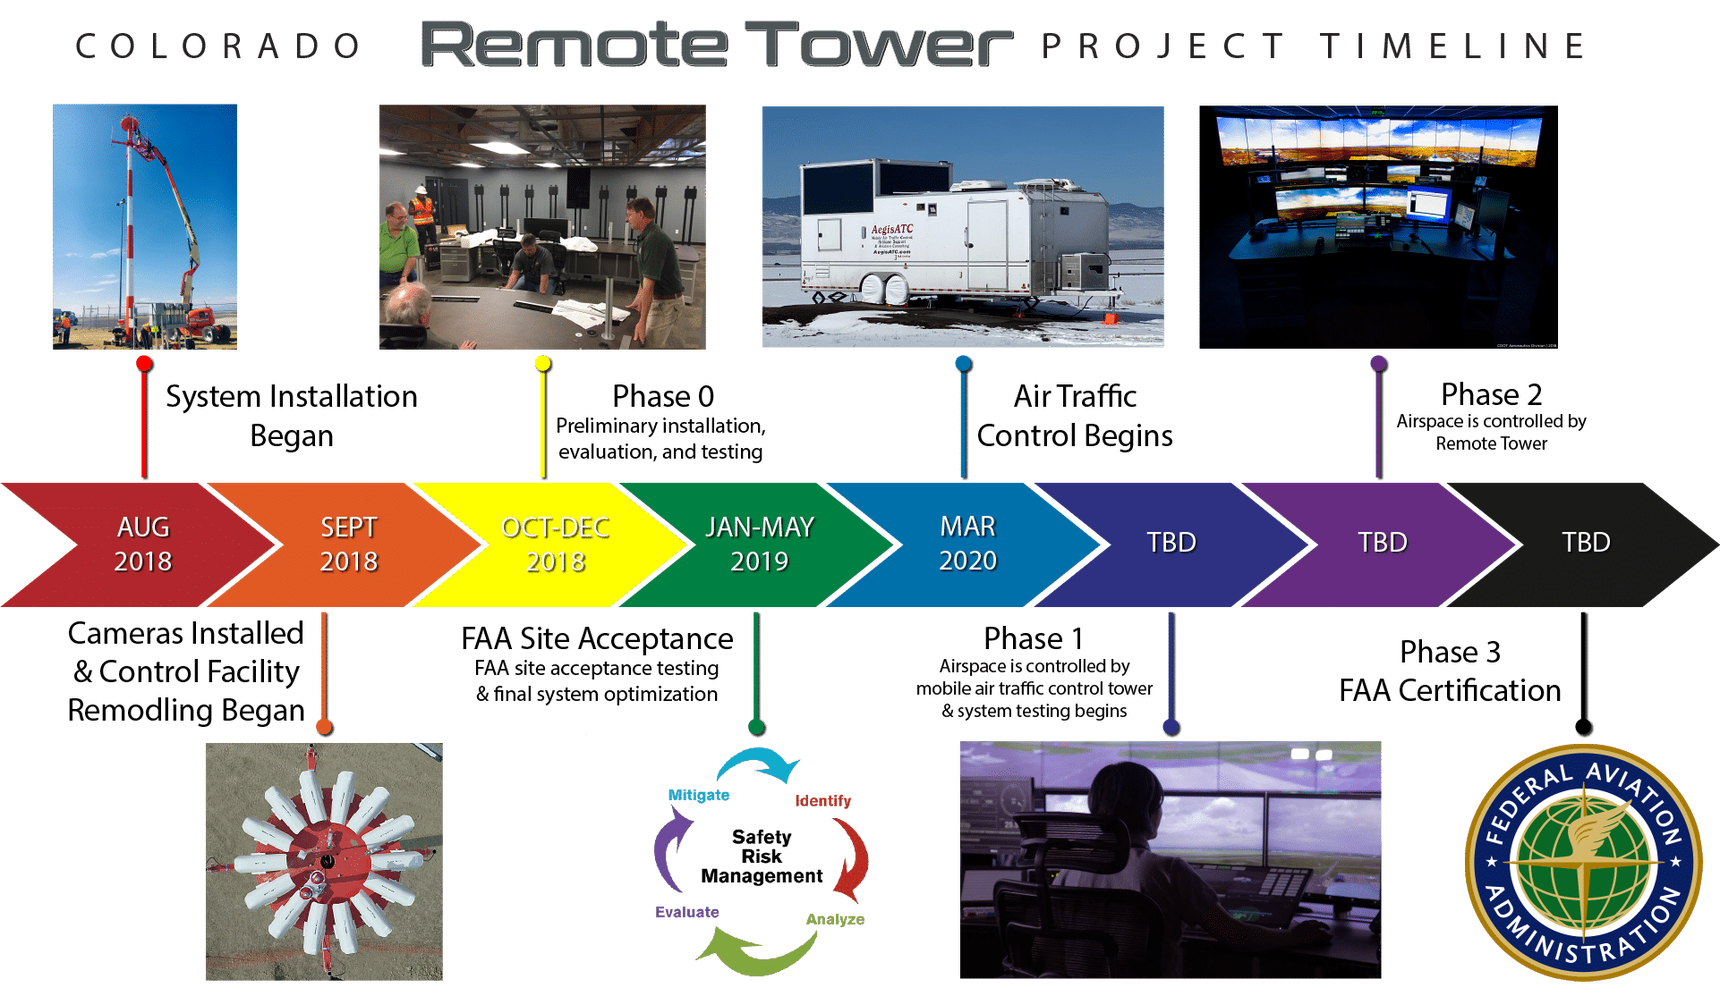 RemoteTower-Timeline_COVIDTBDP1.png detail image